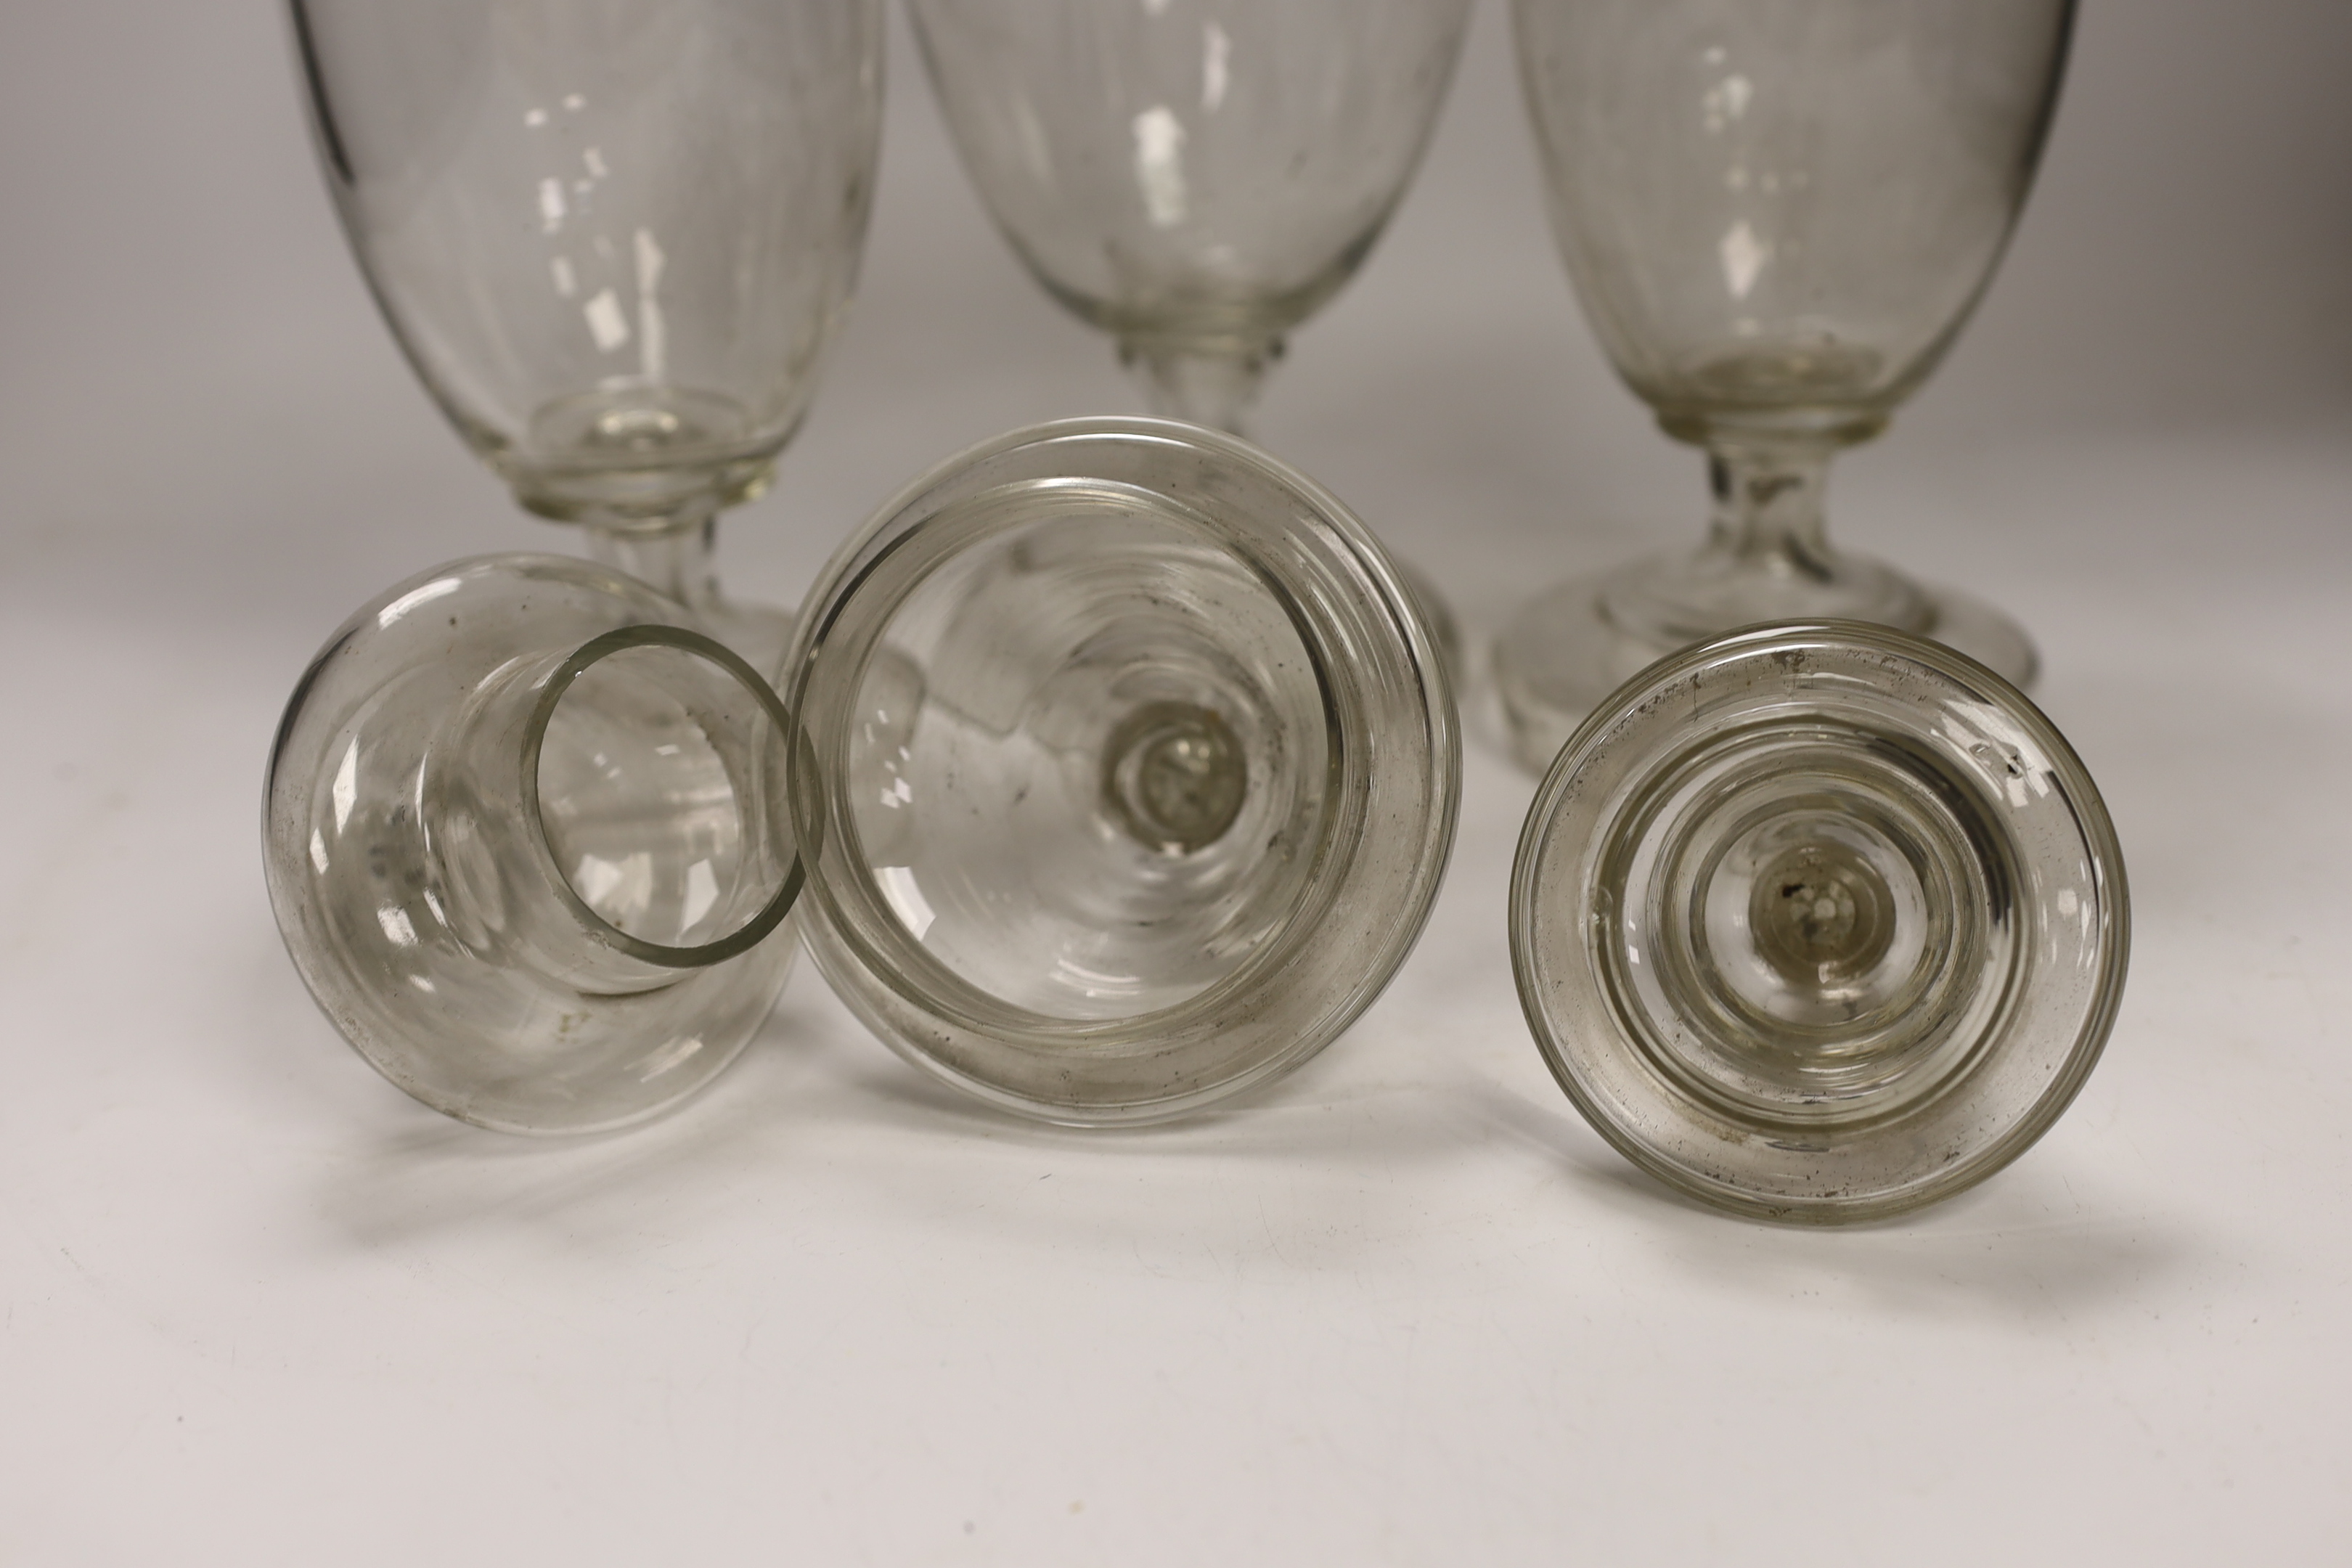 Three Victorian or Bohemian glass sweet jars, largest 41cm high